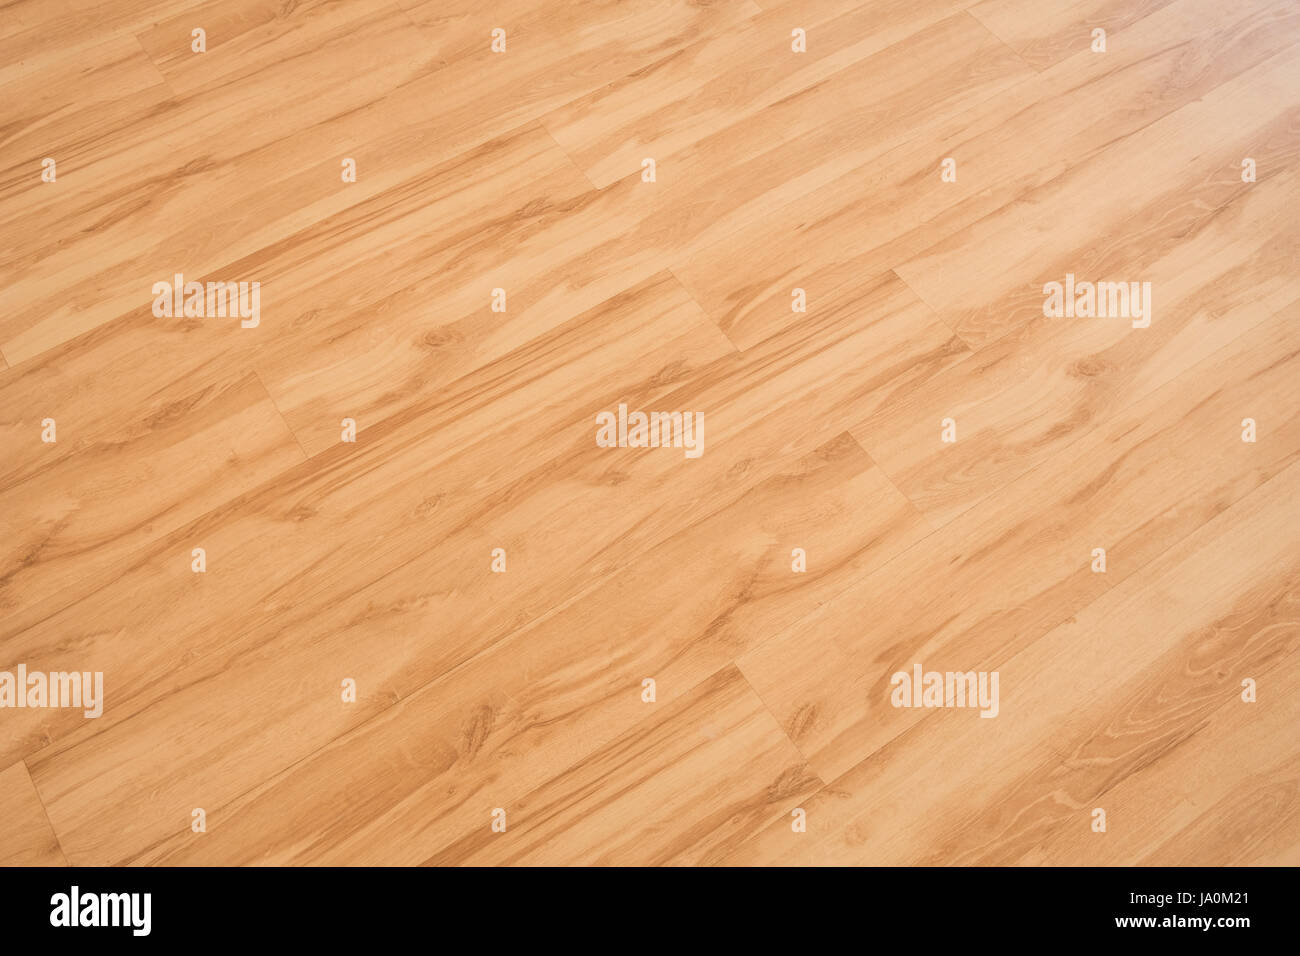 wooden floor - oak wood parquet / laminate background Stock Photo